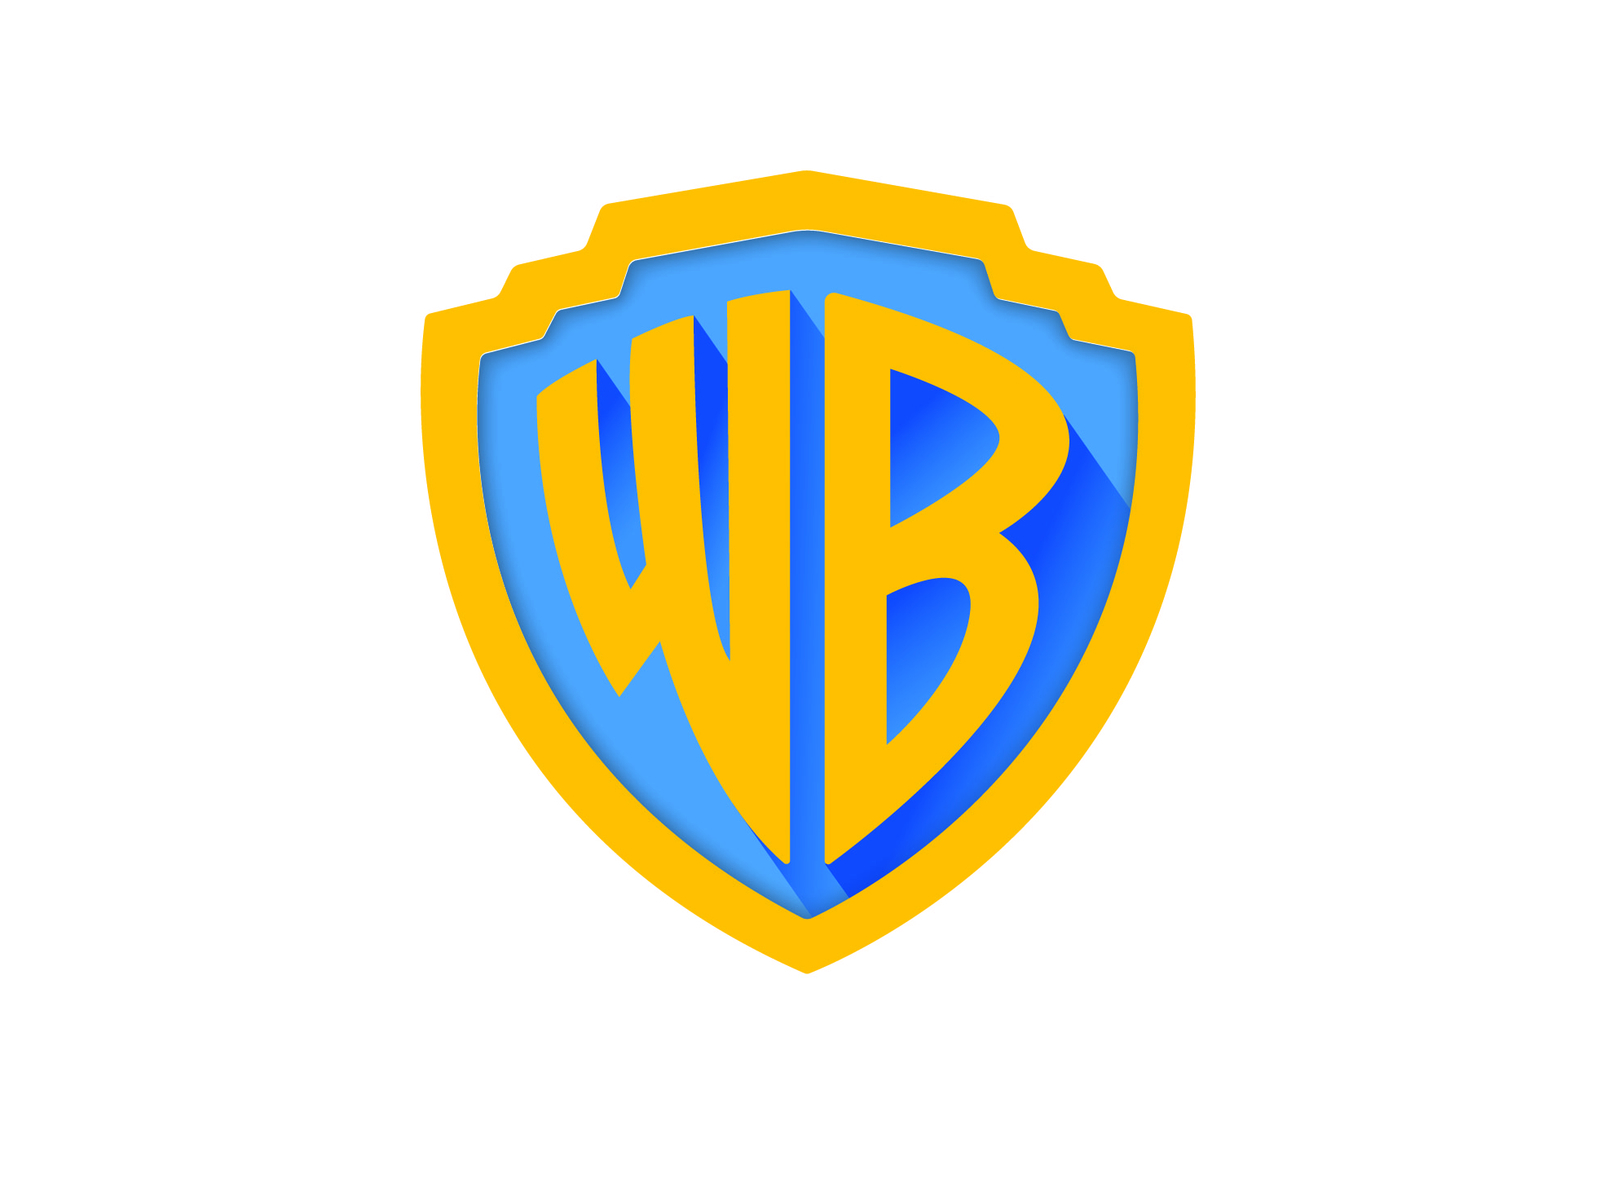 Warner Bros Logo by Samuel Humeau on Dribbble